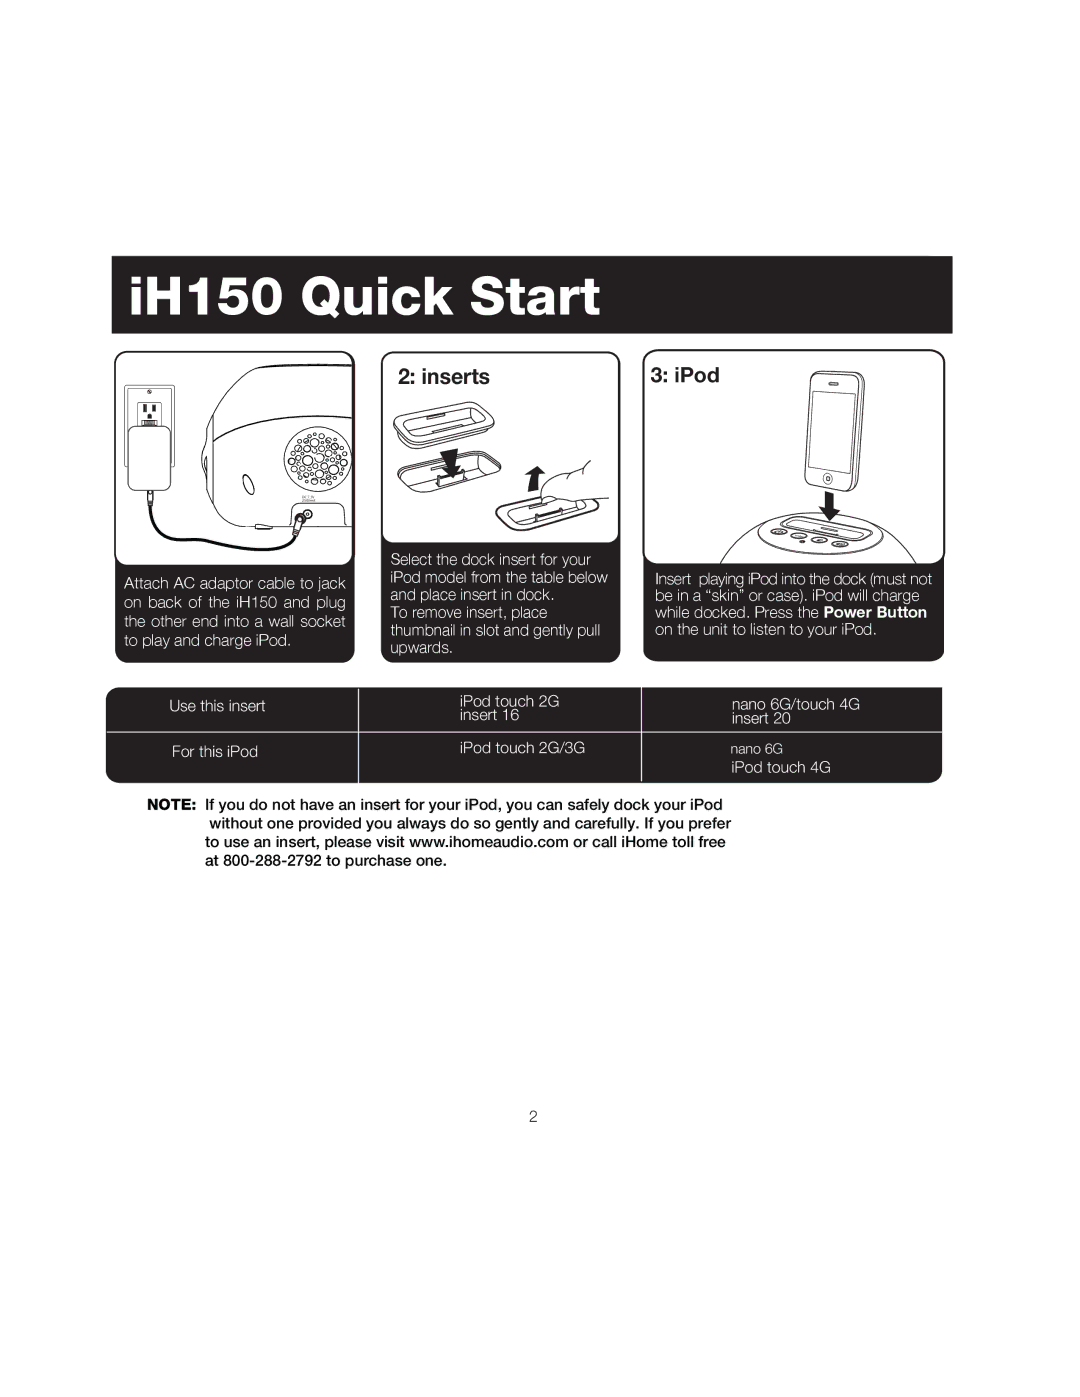 iHome iH150 manual IH150 Quick Start 